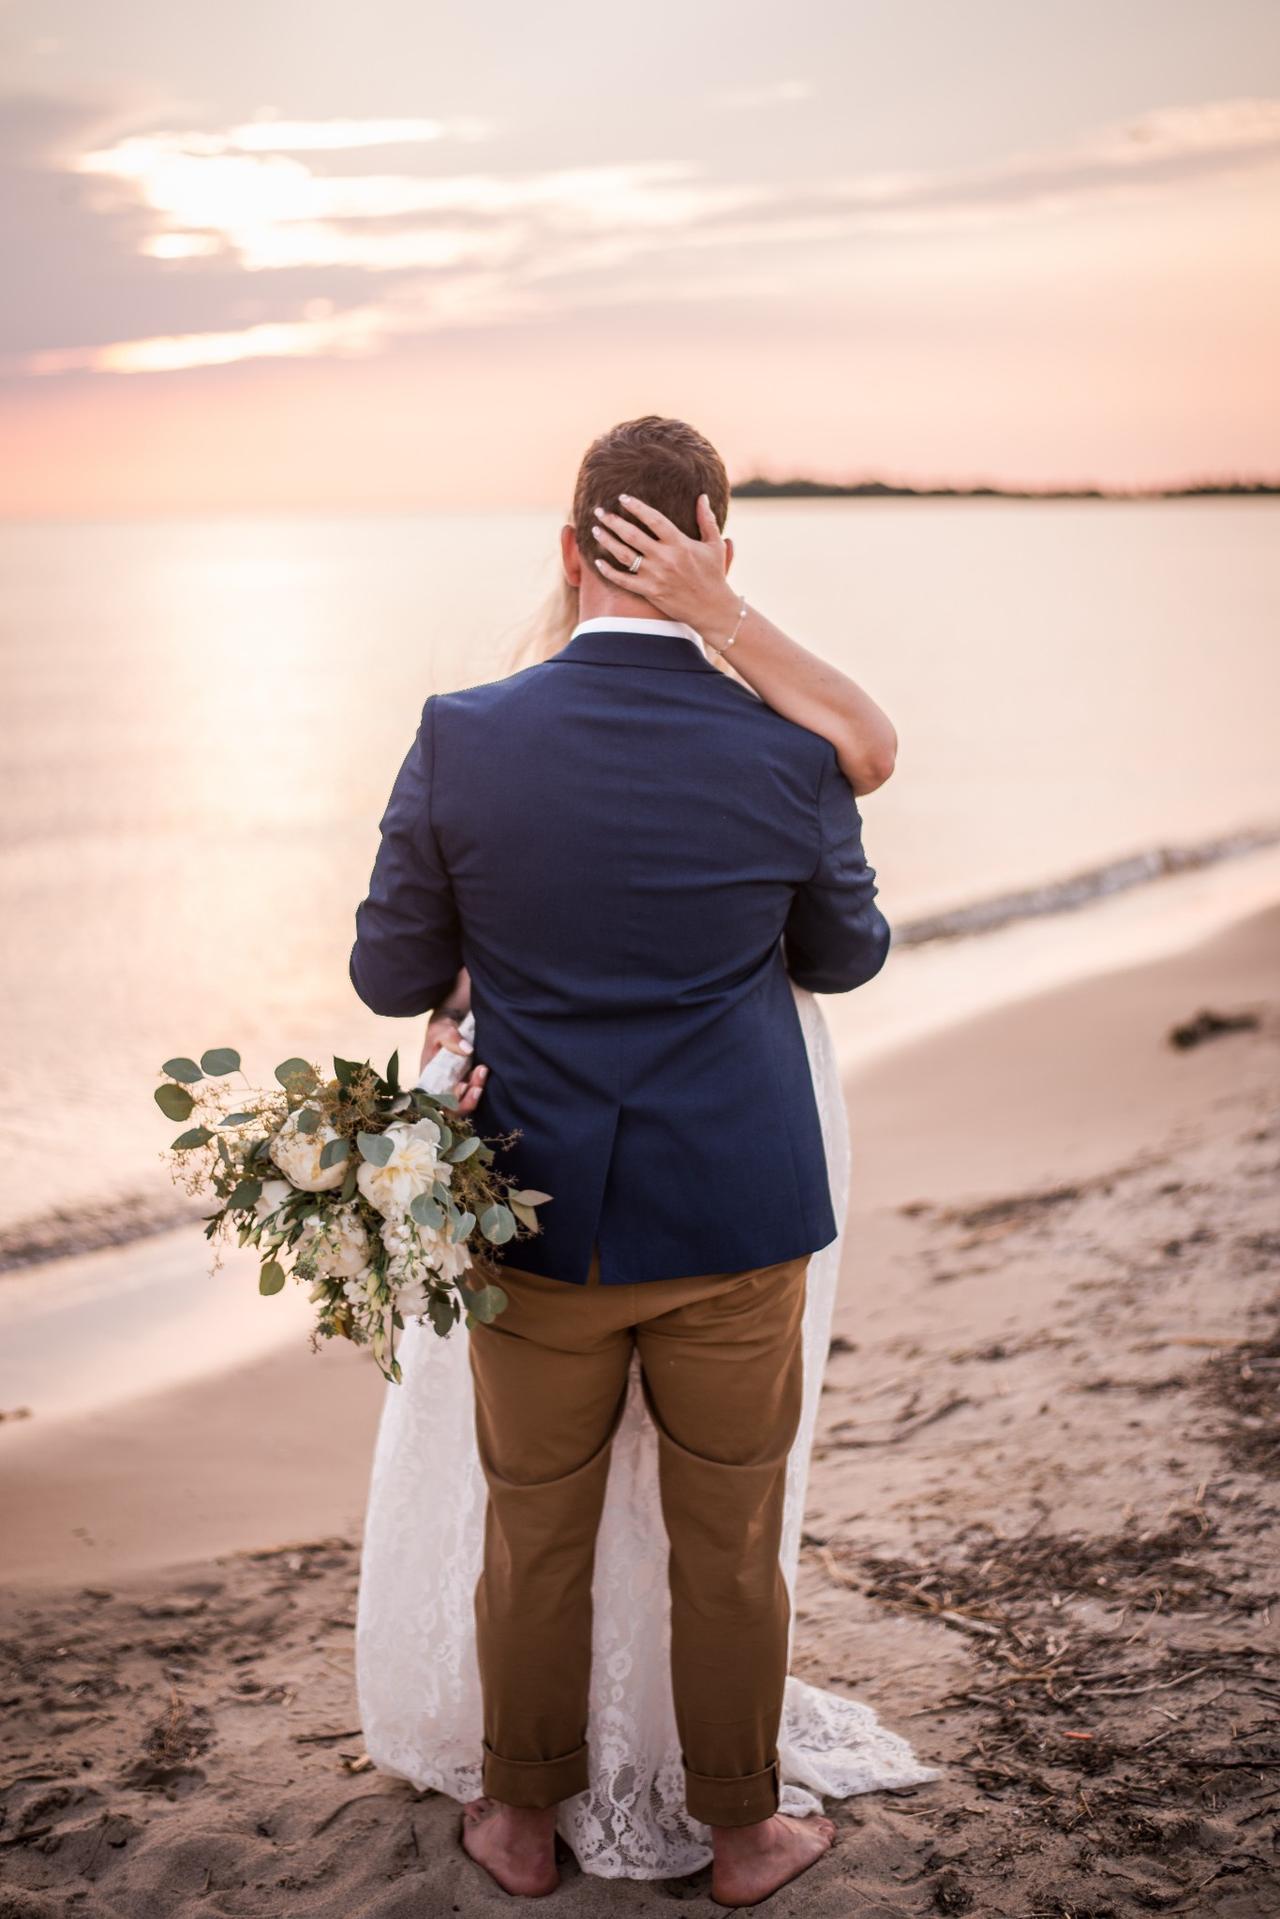 7 Pose Ideas for your Wedding & Engagement Photos - NJ Photographer